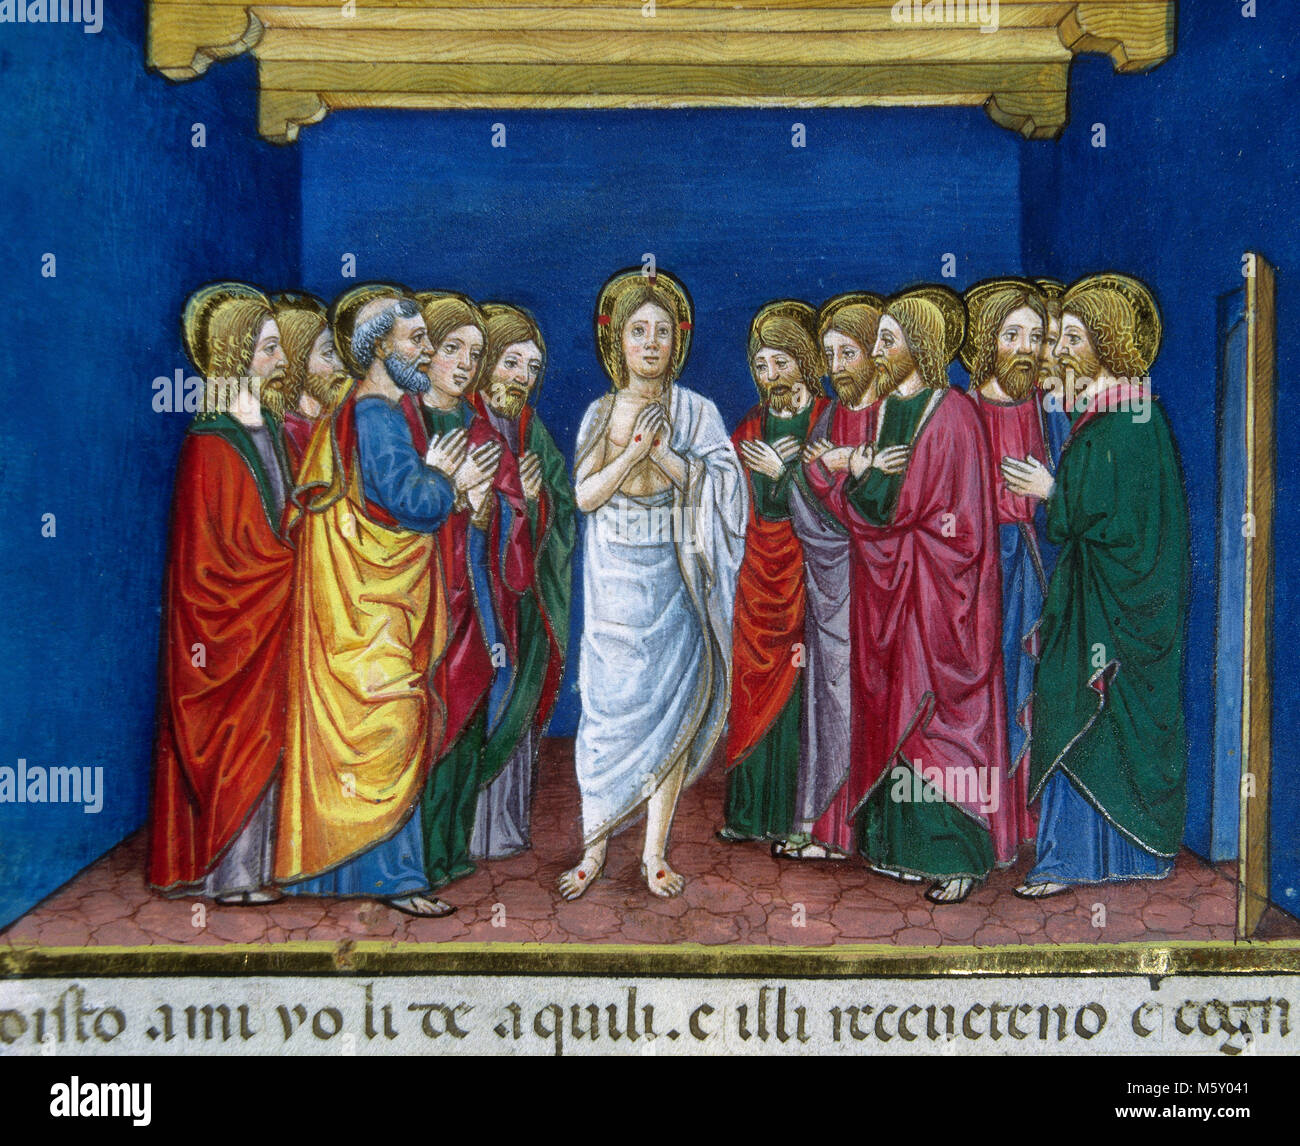 Jesus resurrected lifts up his eyes to heaven and explain a parable. Codex of Predis, 1476. Royal Library. Turin. Italy. Stock Photo